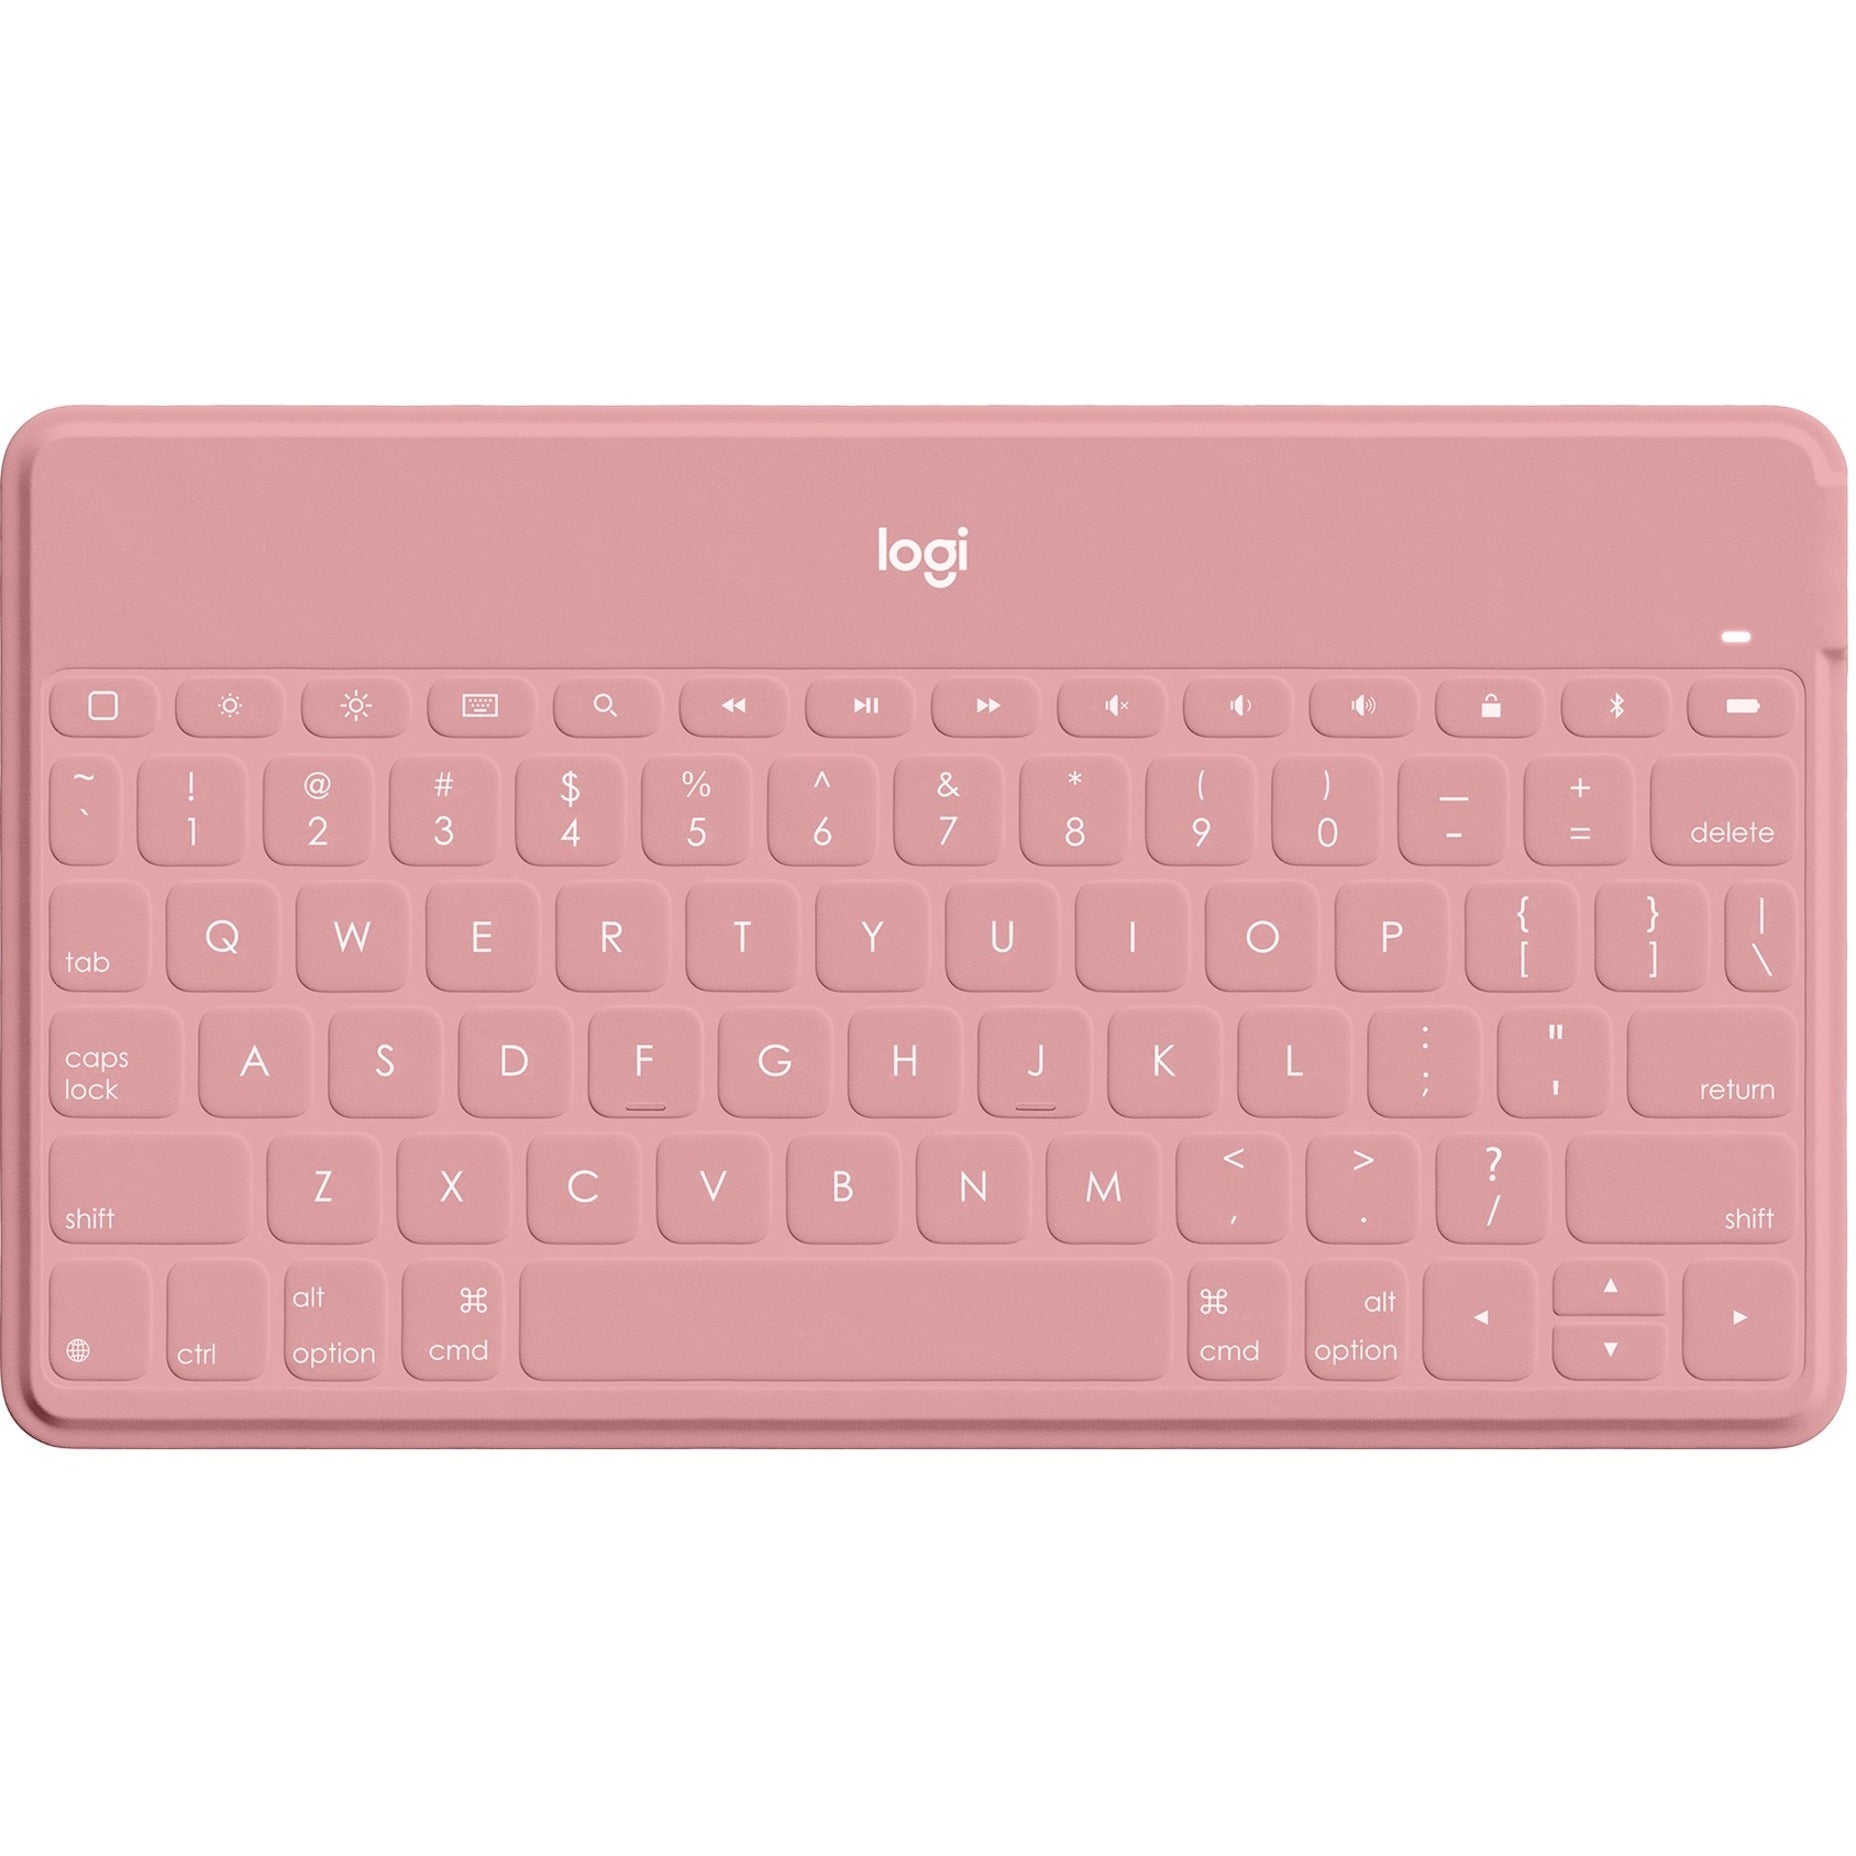 Logitech 920-010039 Keys-To-Go Keyboard, Lightweight, Slim, Bluetooth, Rechargeable Battery